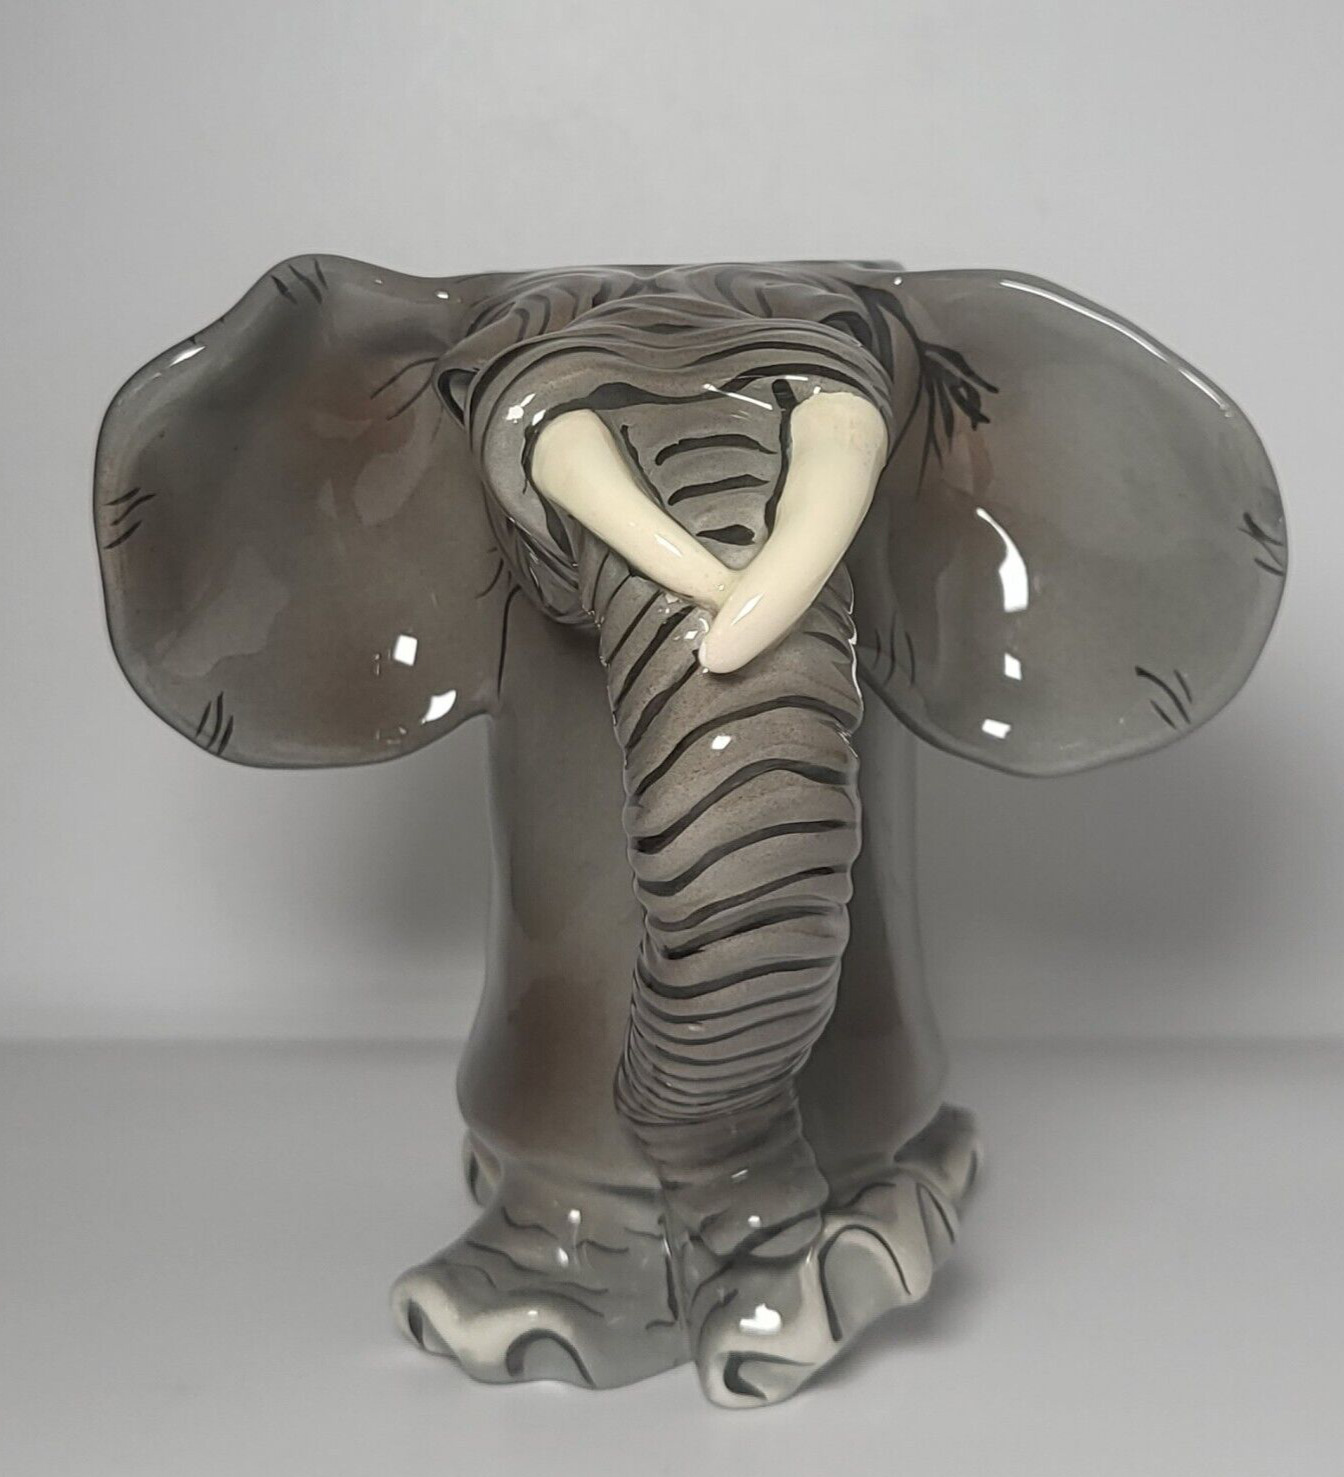 Swak Character Collectibles Elephant 2003 Ceramic Mug Gray Multi 8oz Signed